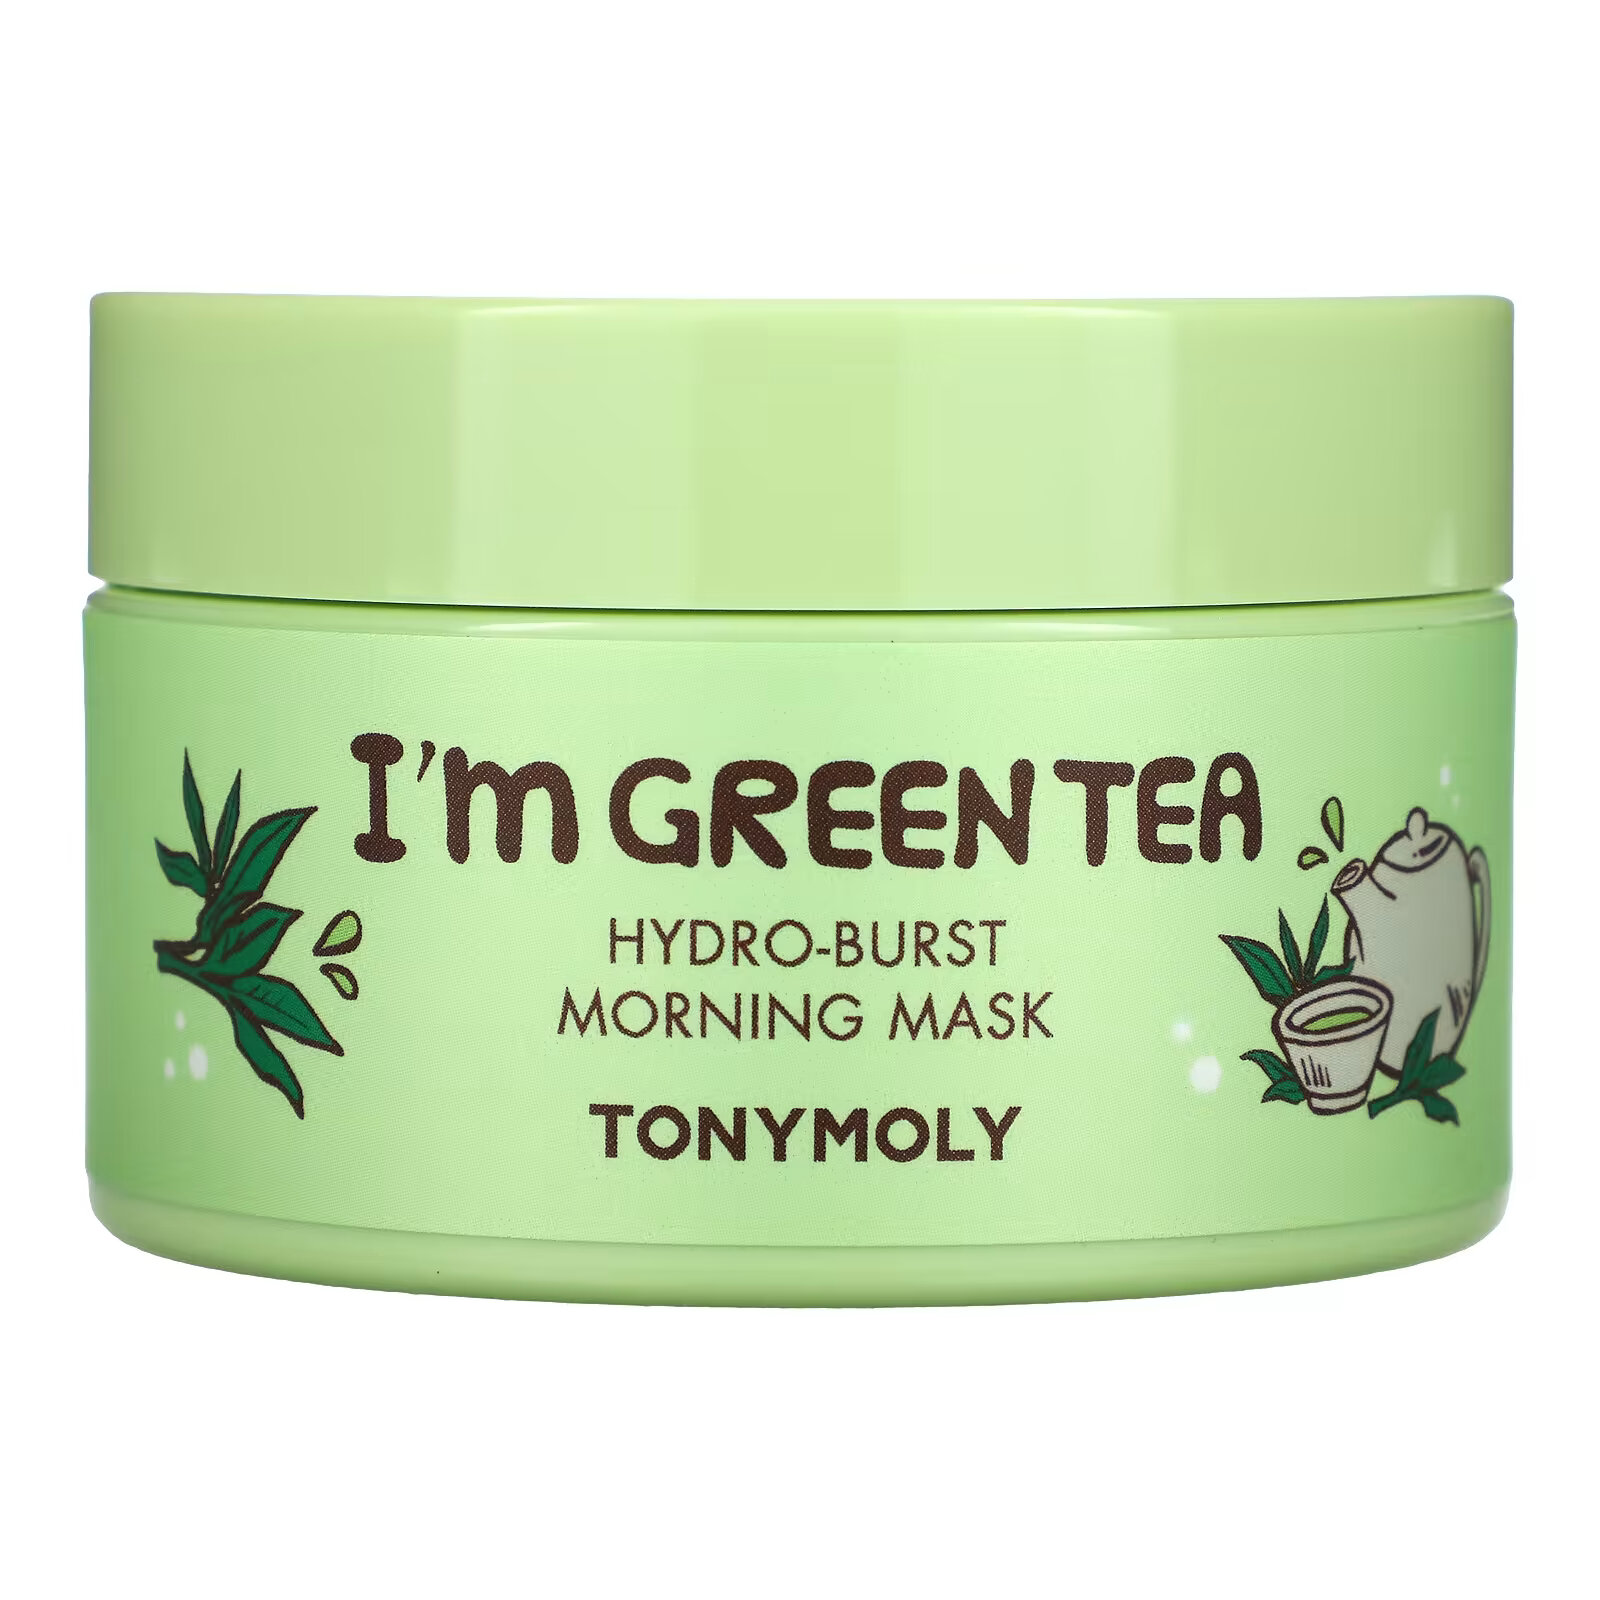 Tony Moly, I'm Green Tea, утренняя маска для лица Hydro-Burst, 100 г (3,52 унции) tony moly i m rose восстанавливающая маска для сна 3 52 унции 100 г